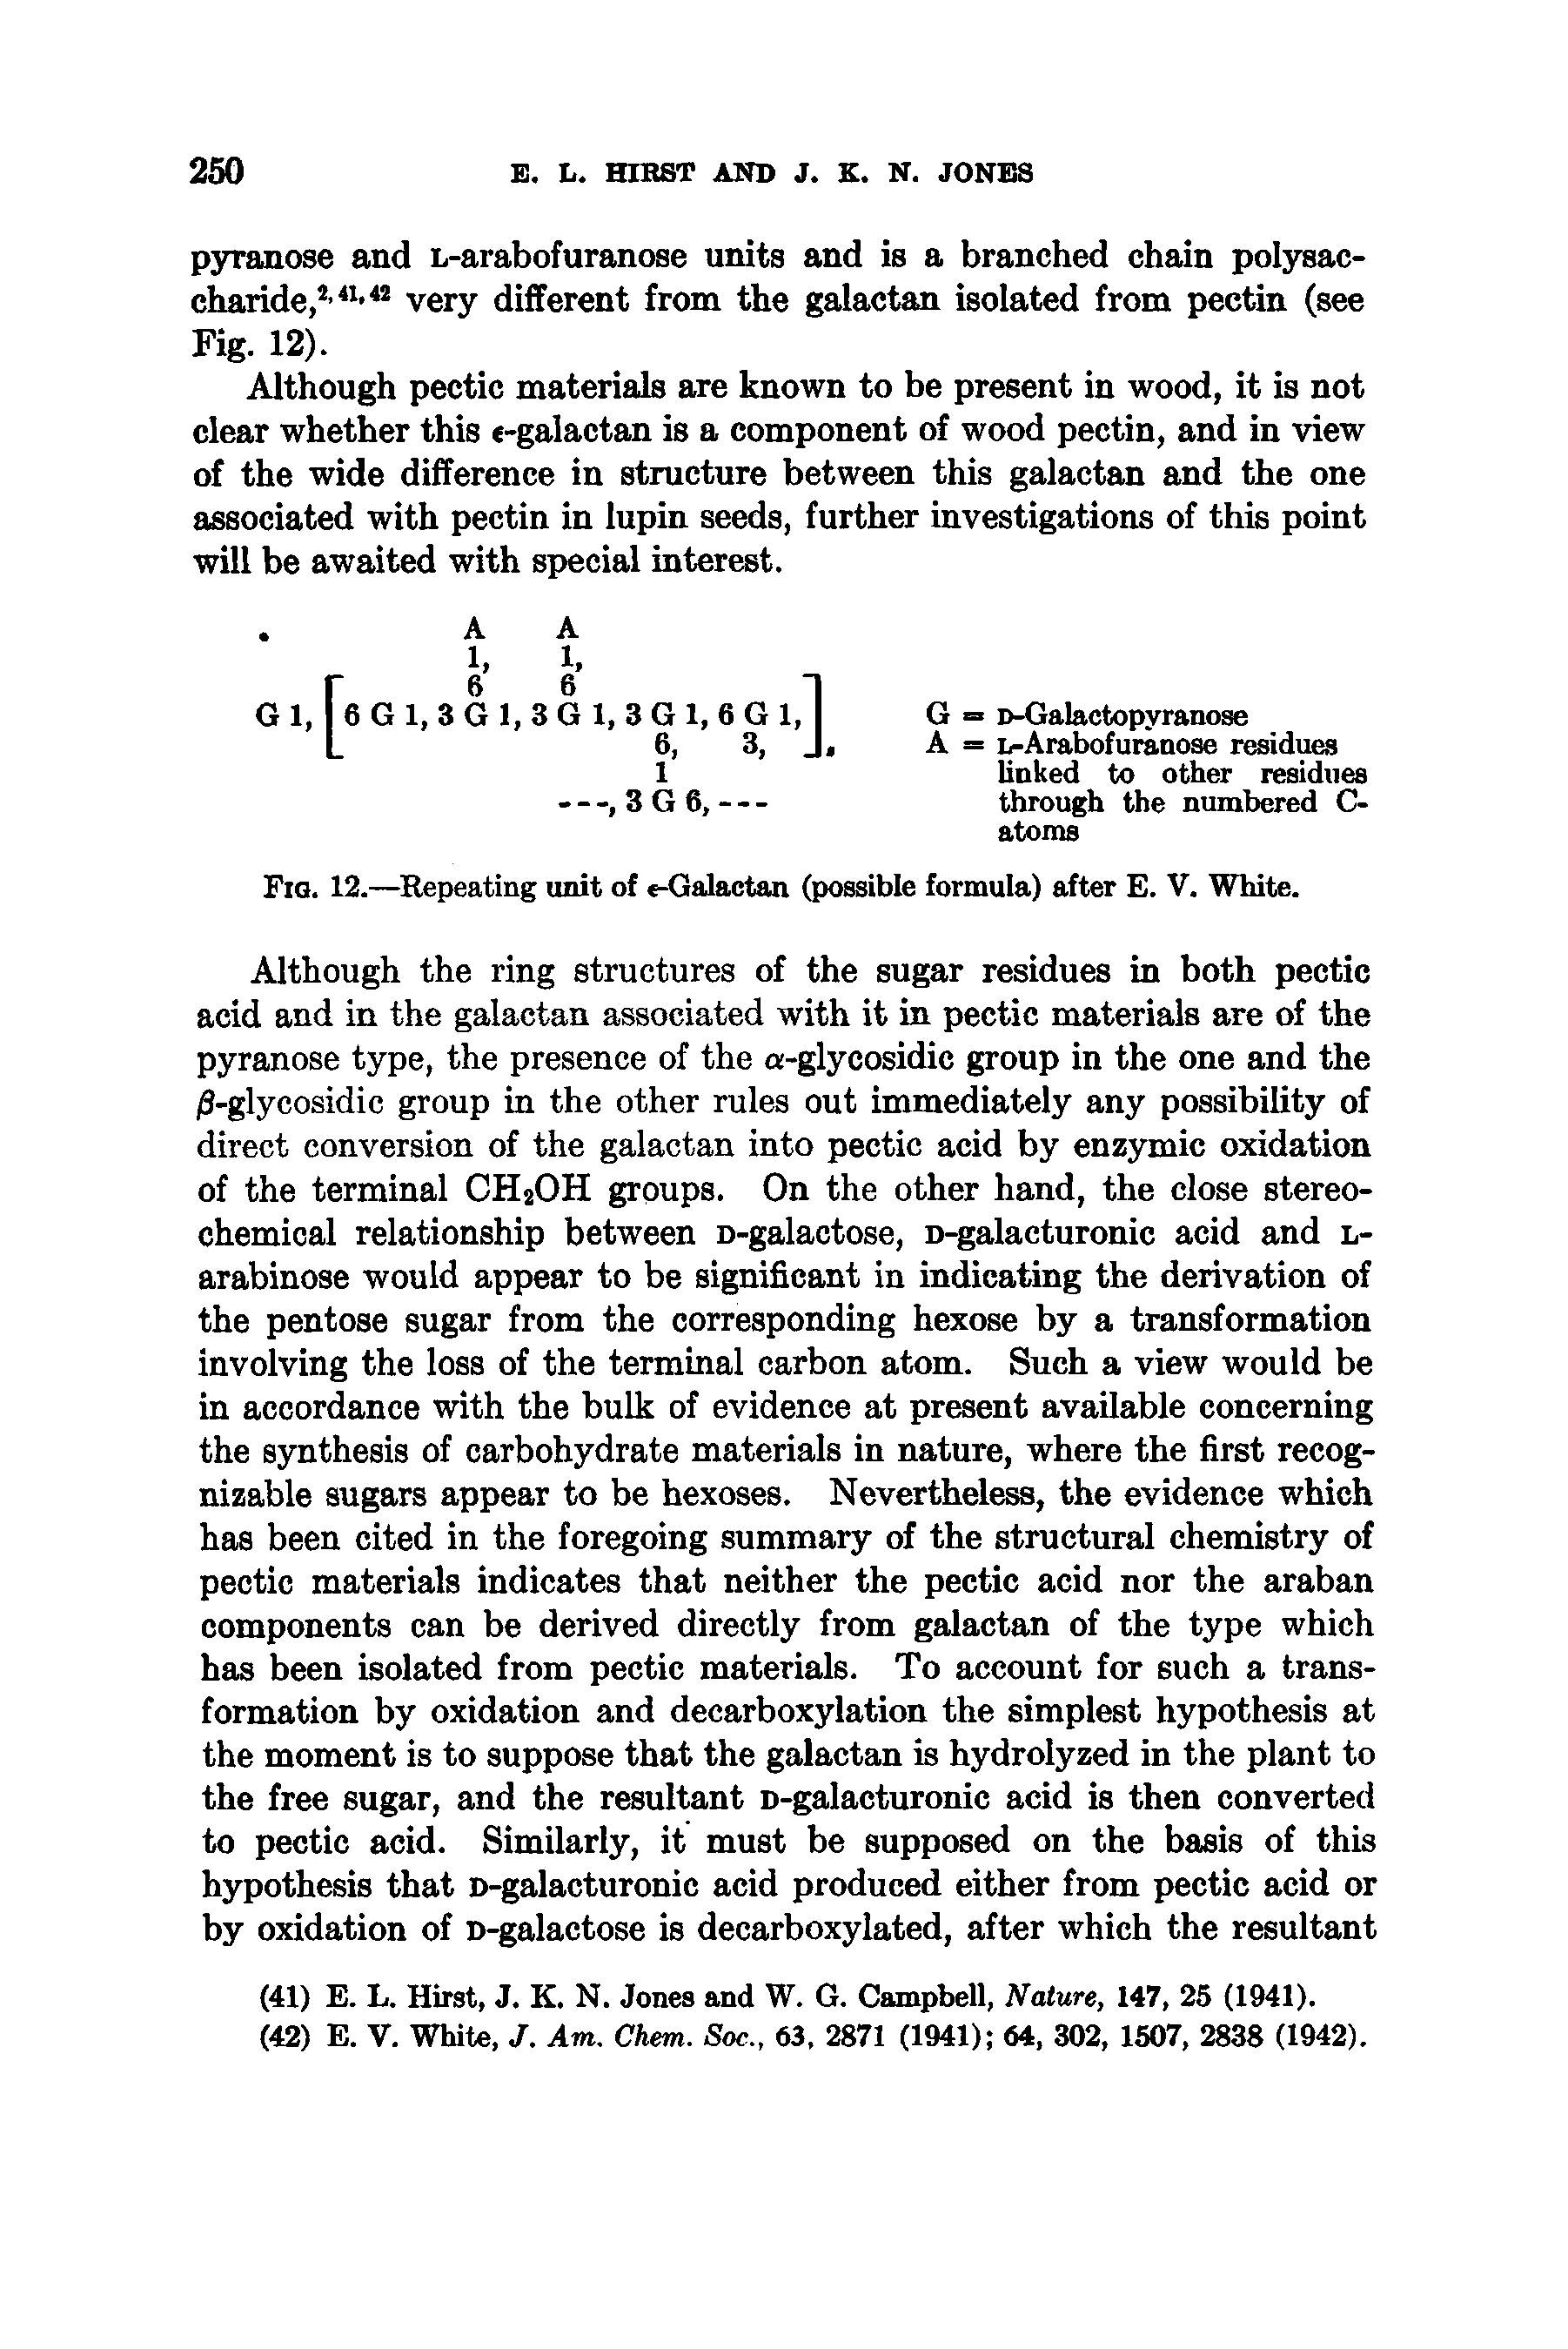 Fig. 12.—Repeating unit of e-Galactan (possible formula) after E. V. White.